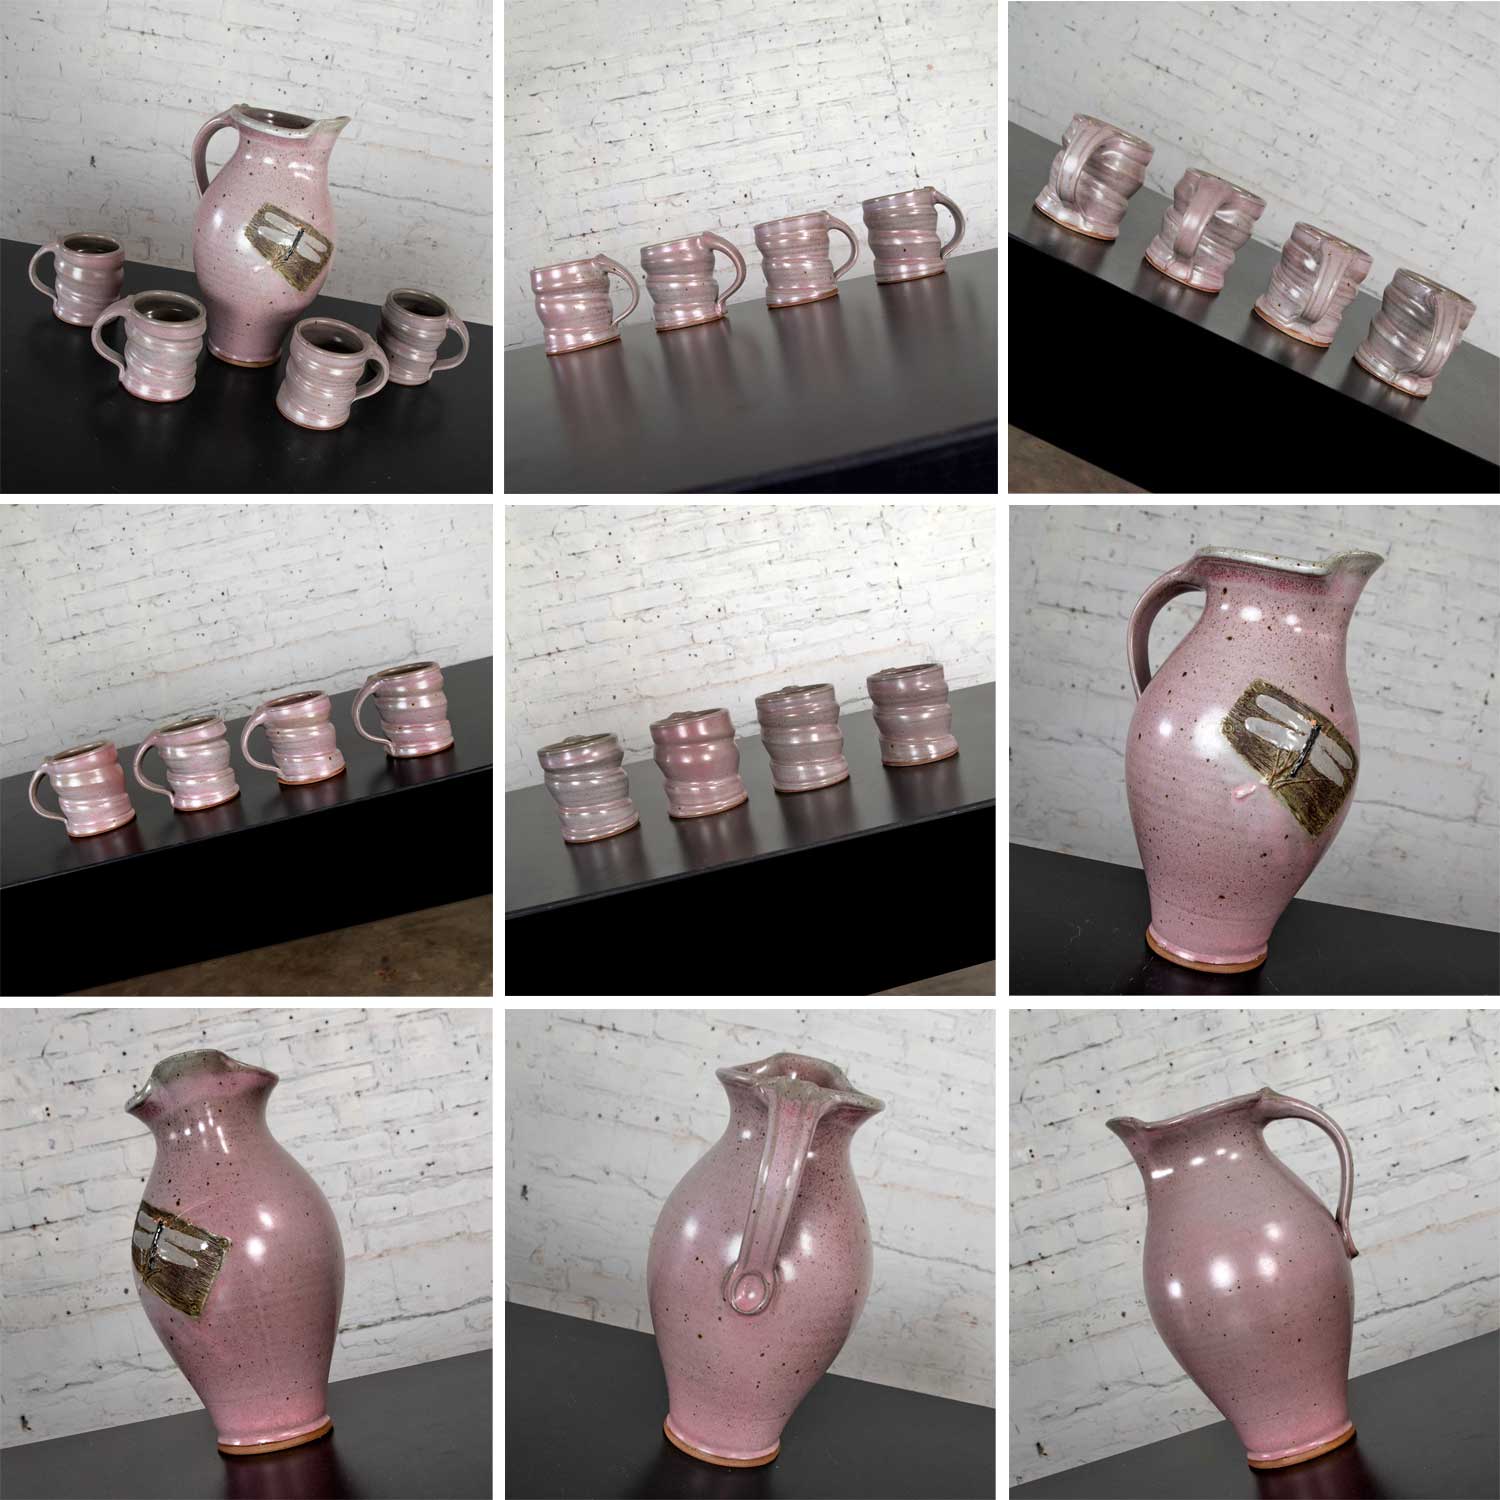 Purple Ceramic Handmade Hot Chocolate Set 1 Pitcher & 4 Cups